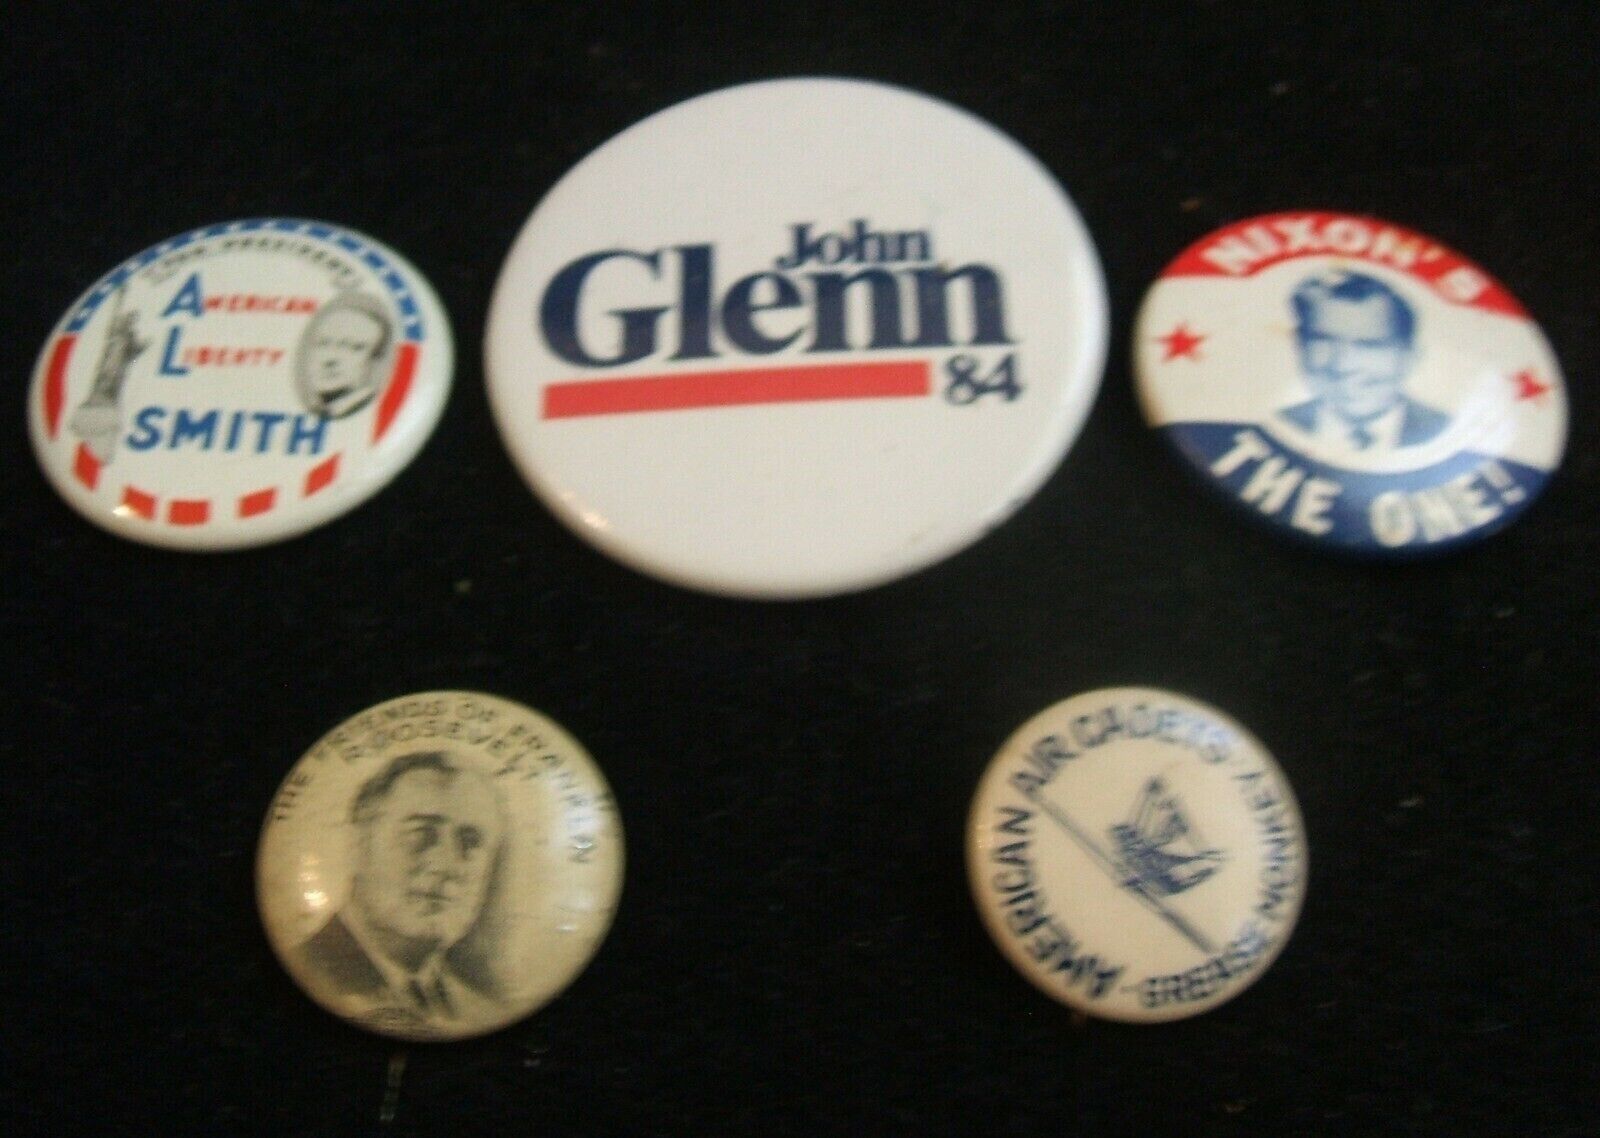 Vintage Lot of 5 Pinbacks Franklin Roosevelt Richard Nixon John Glenn 2 More